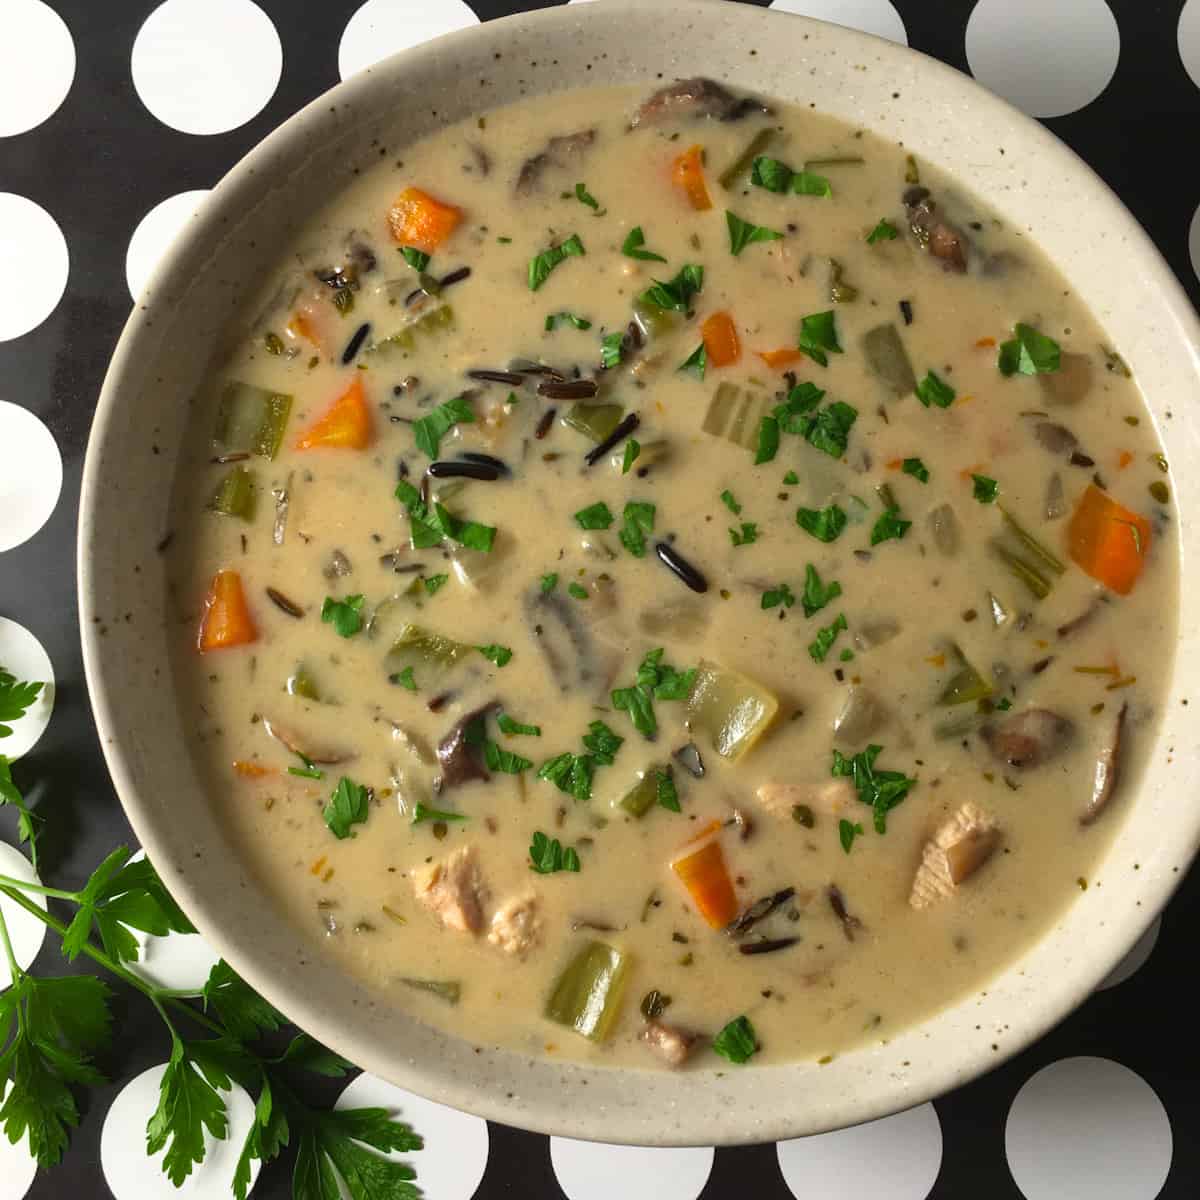 https://summeryule.com/wp-content/uploads/2021/09/instant-pot-turkey-wild-rice-soup.jpeg